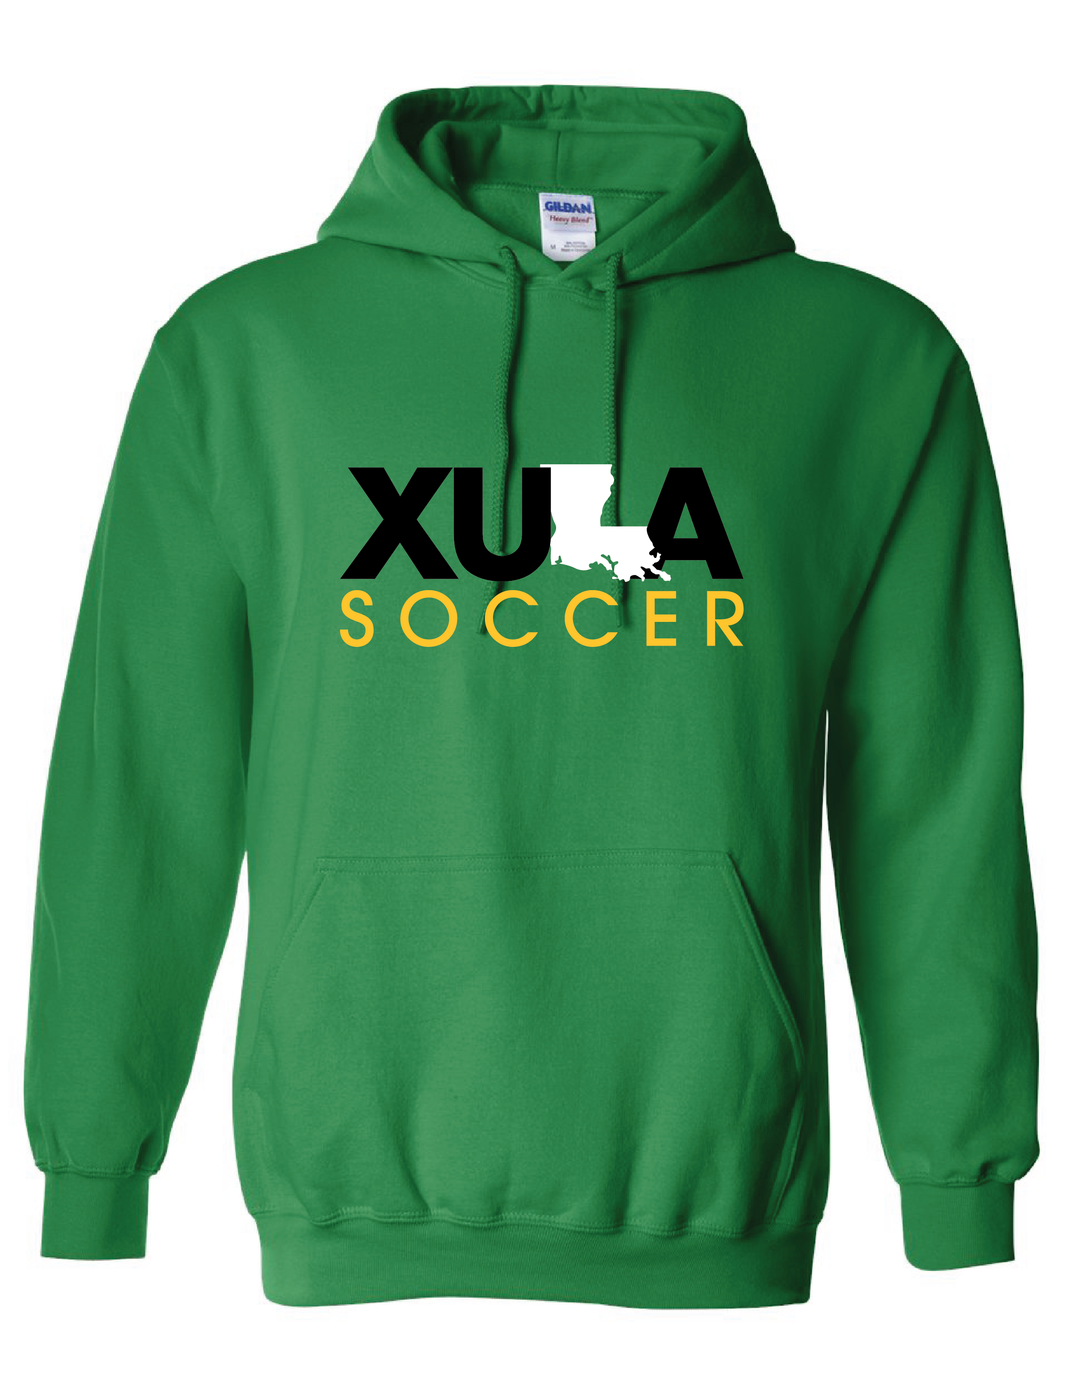 XULA Soccer Hoody Xavier University Kelly Green Mens Small - Third Coast Soccer